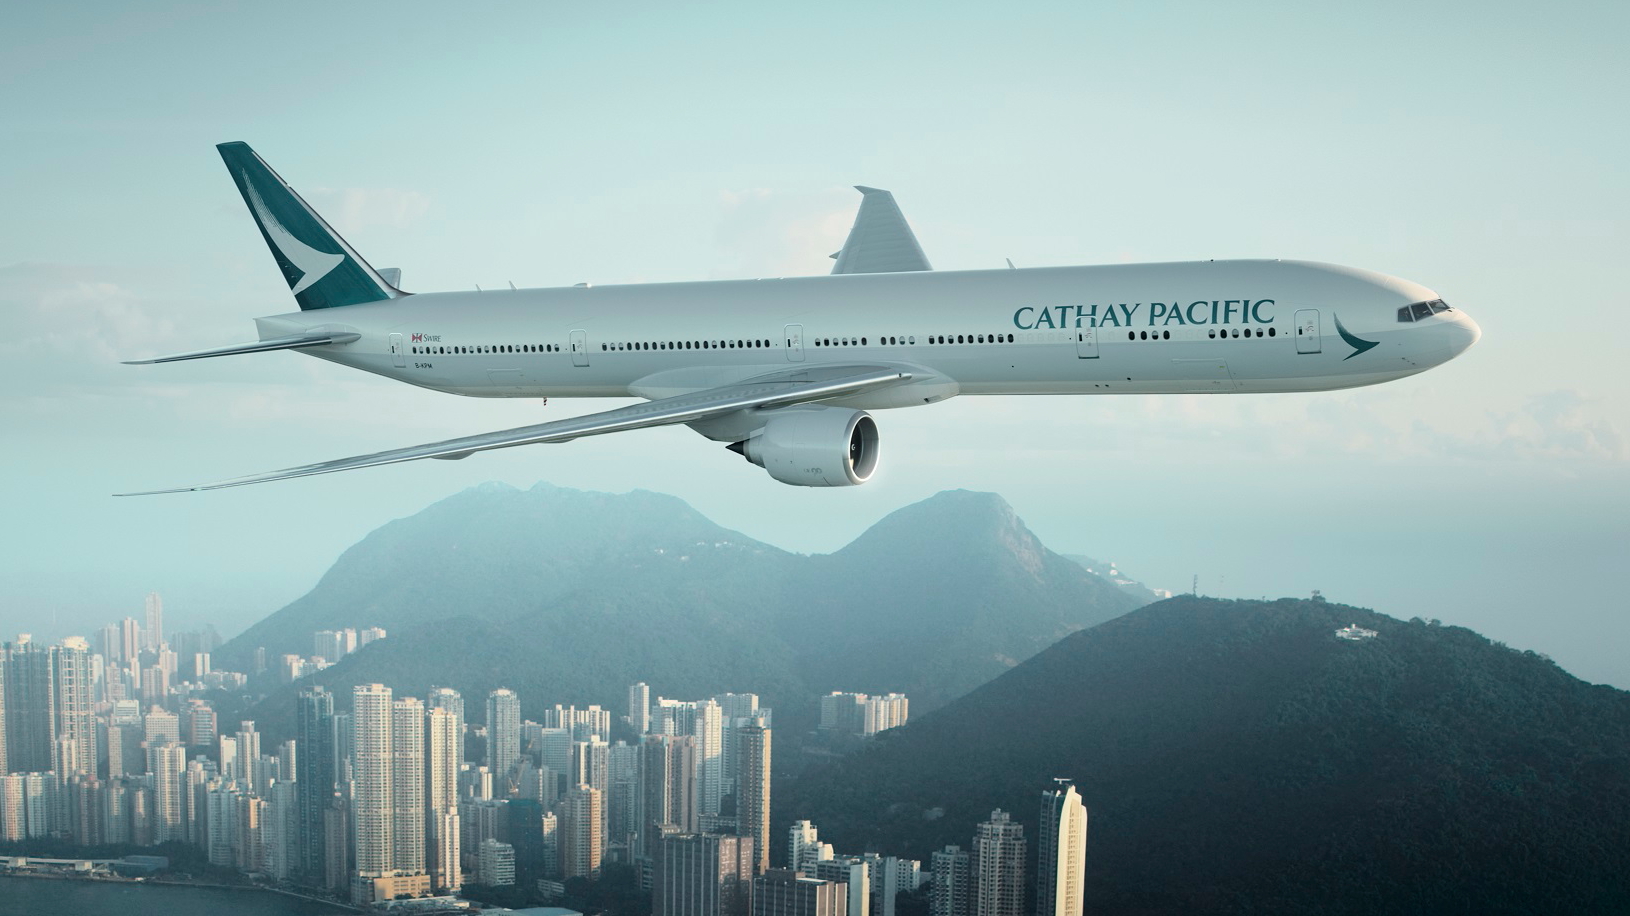 Cathay Pacific aircraft flying over Hong Kong. Click to enlarge.